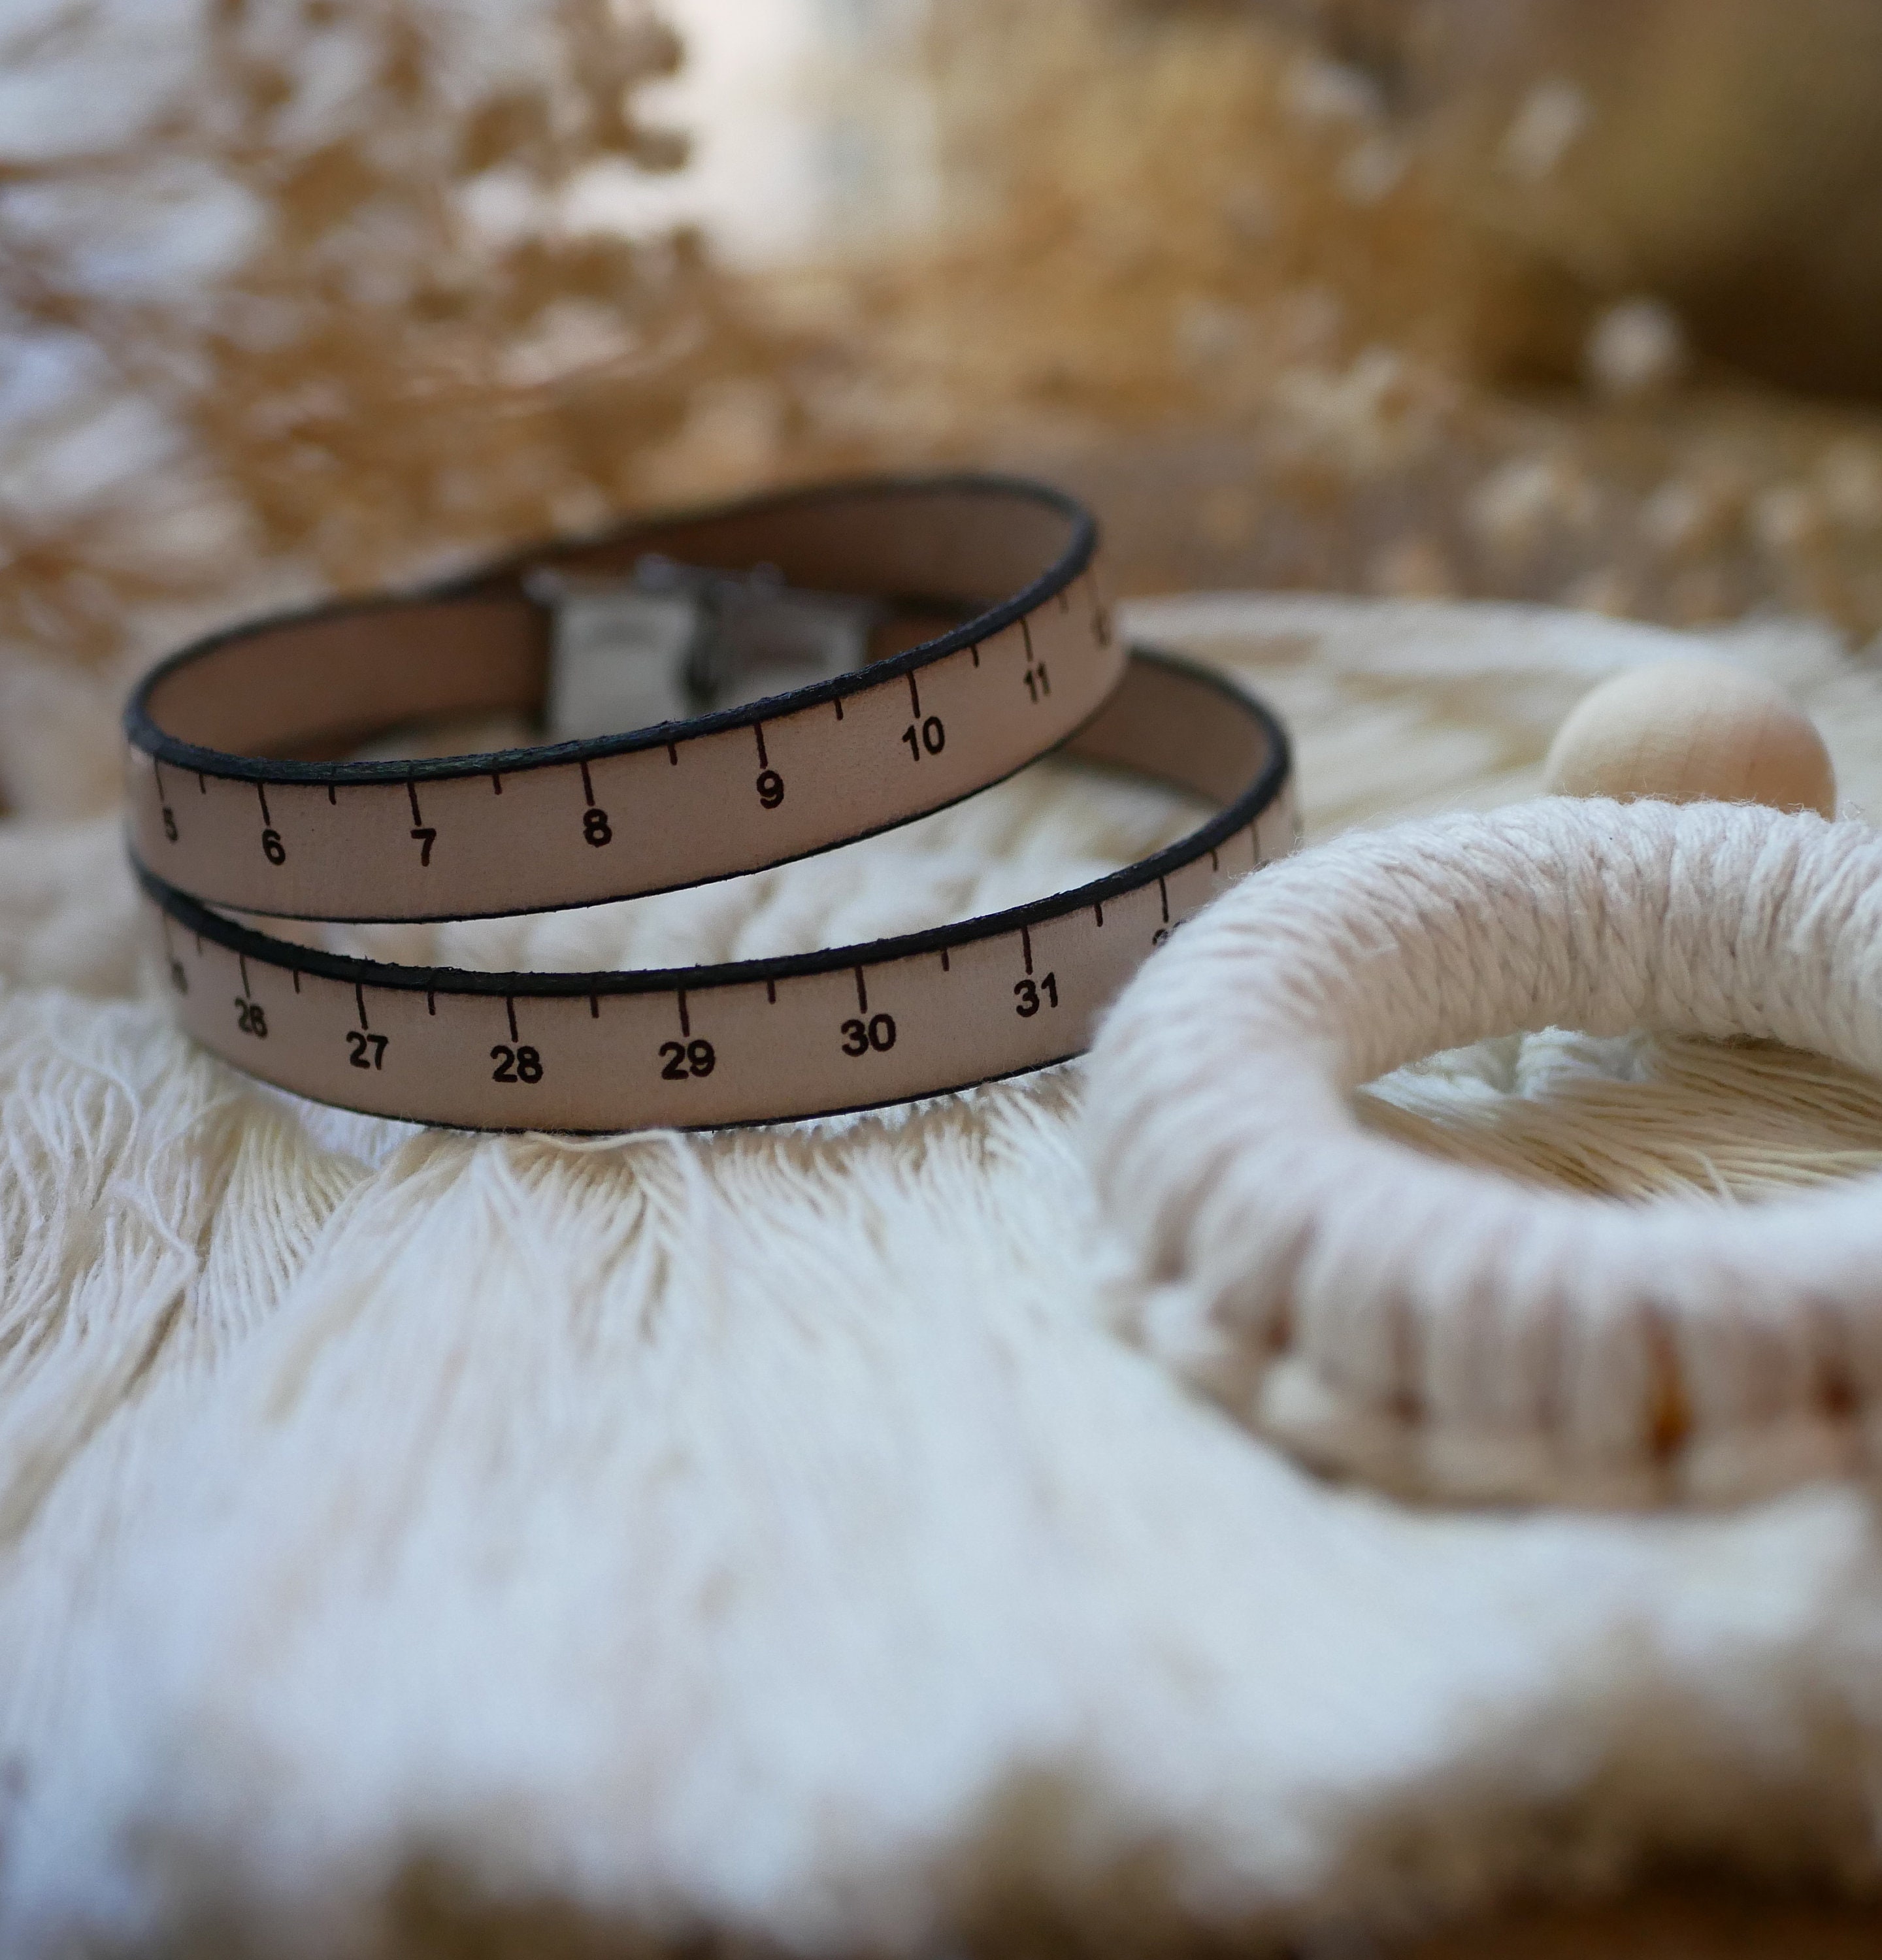 Cloth measuring tape bracelet tutorial